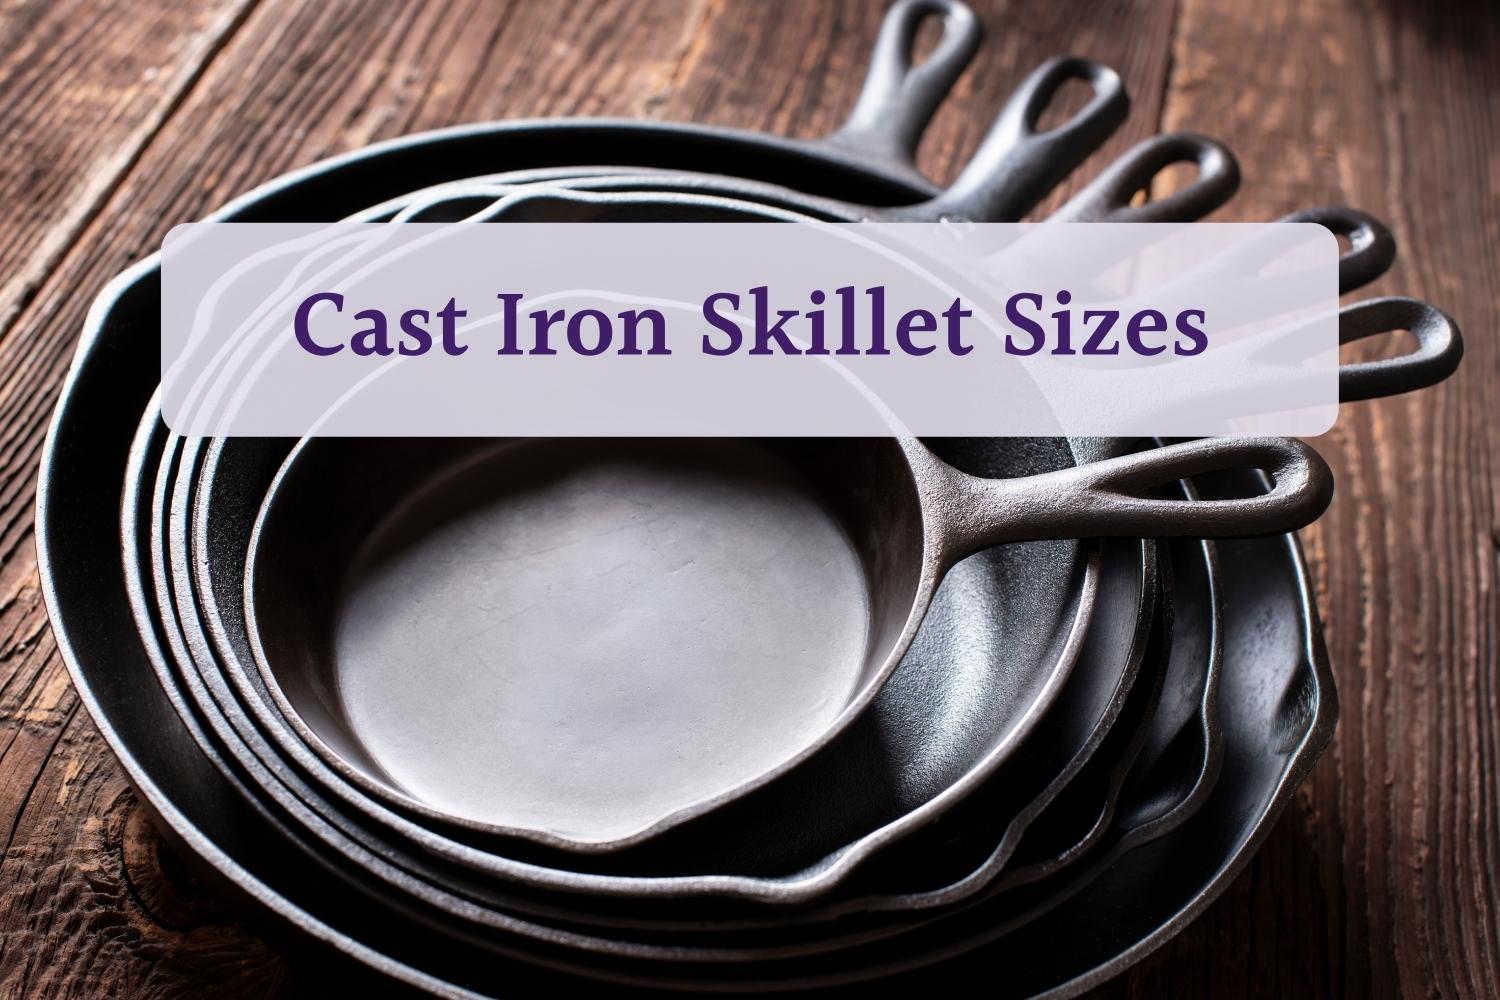 https://clankitchen.com/wp-content/uploads/2022/03/cast-iron-skillet-sizes.jpg